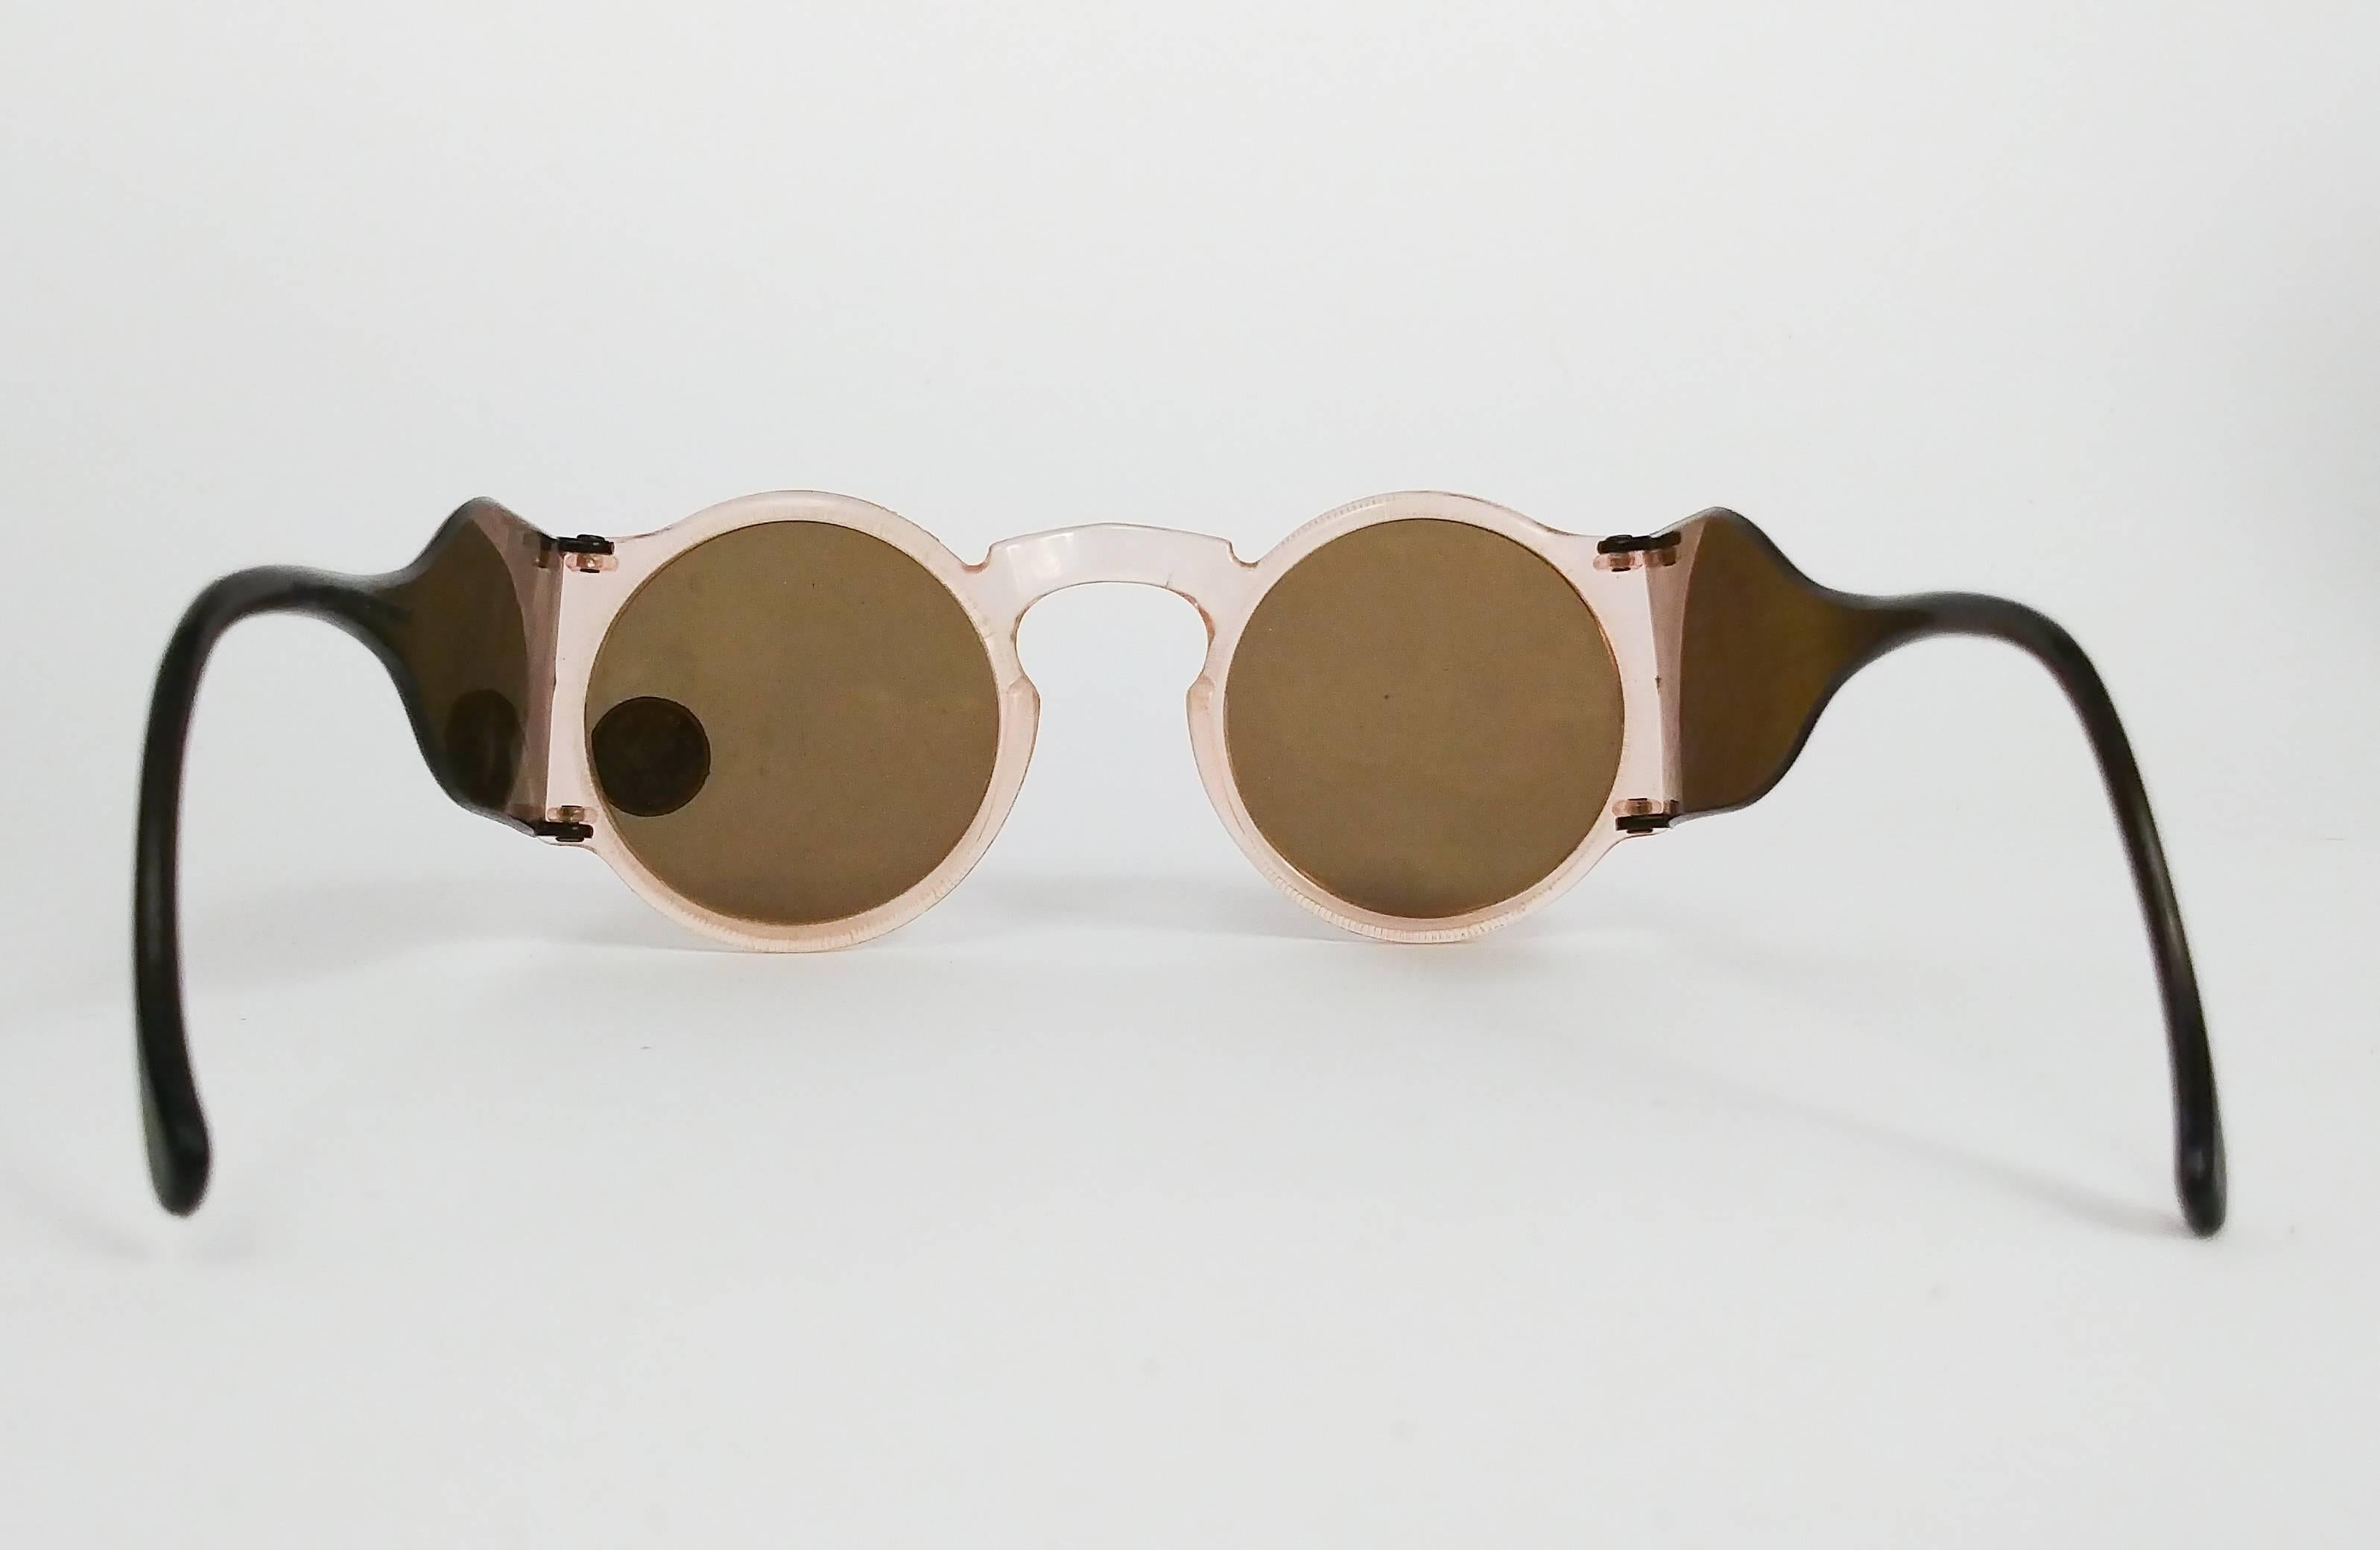 1930s sunglasses